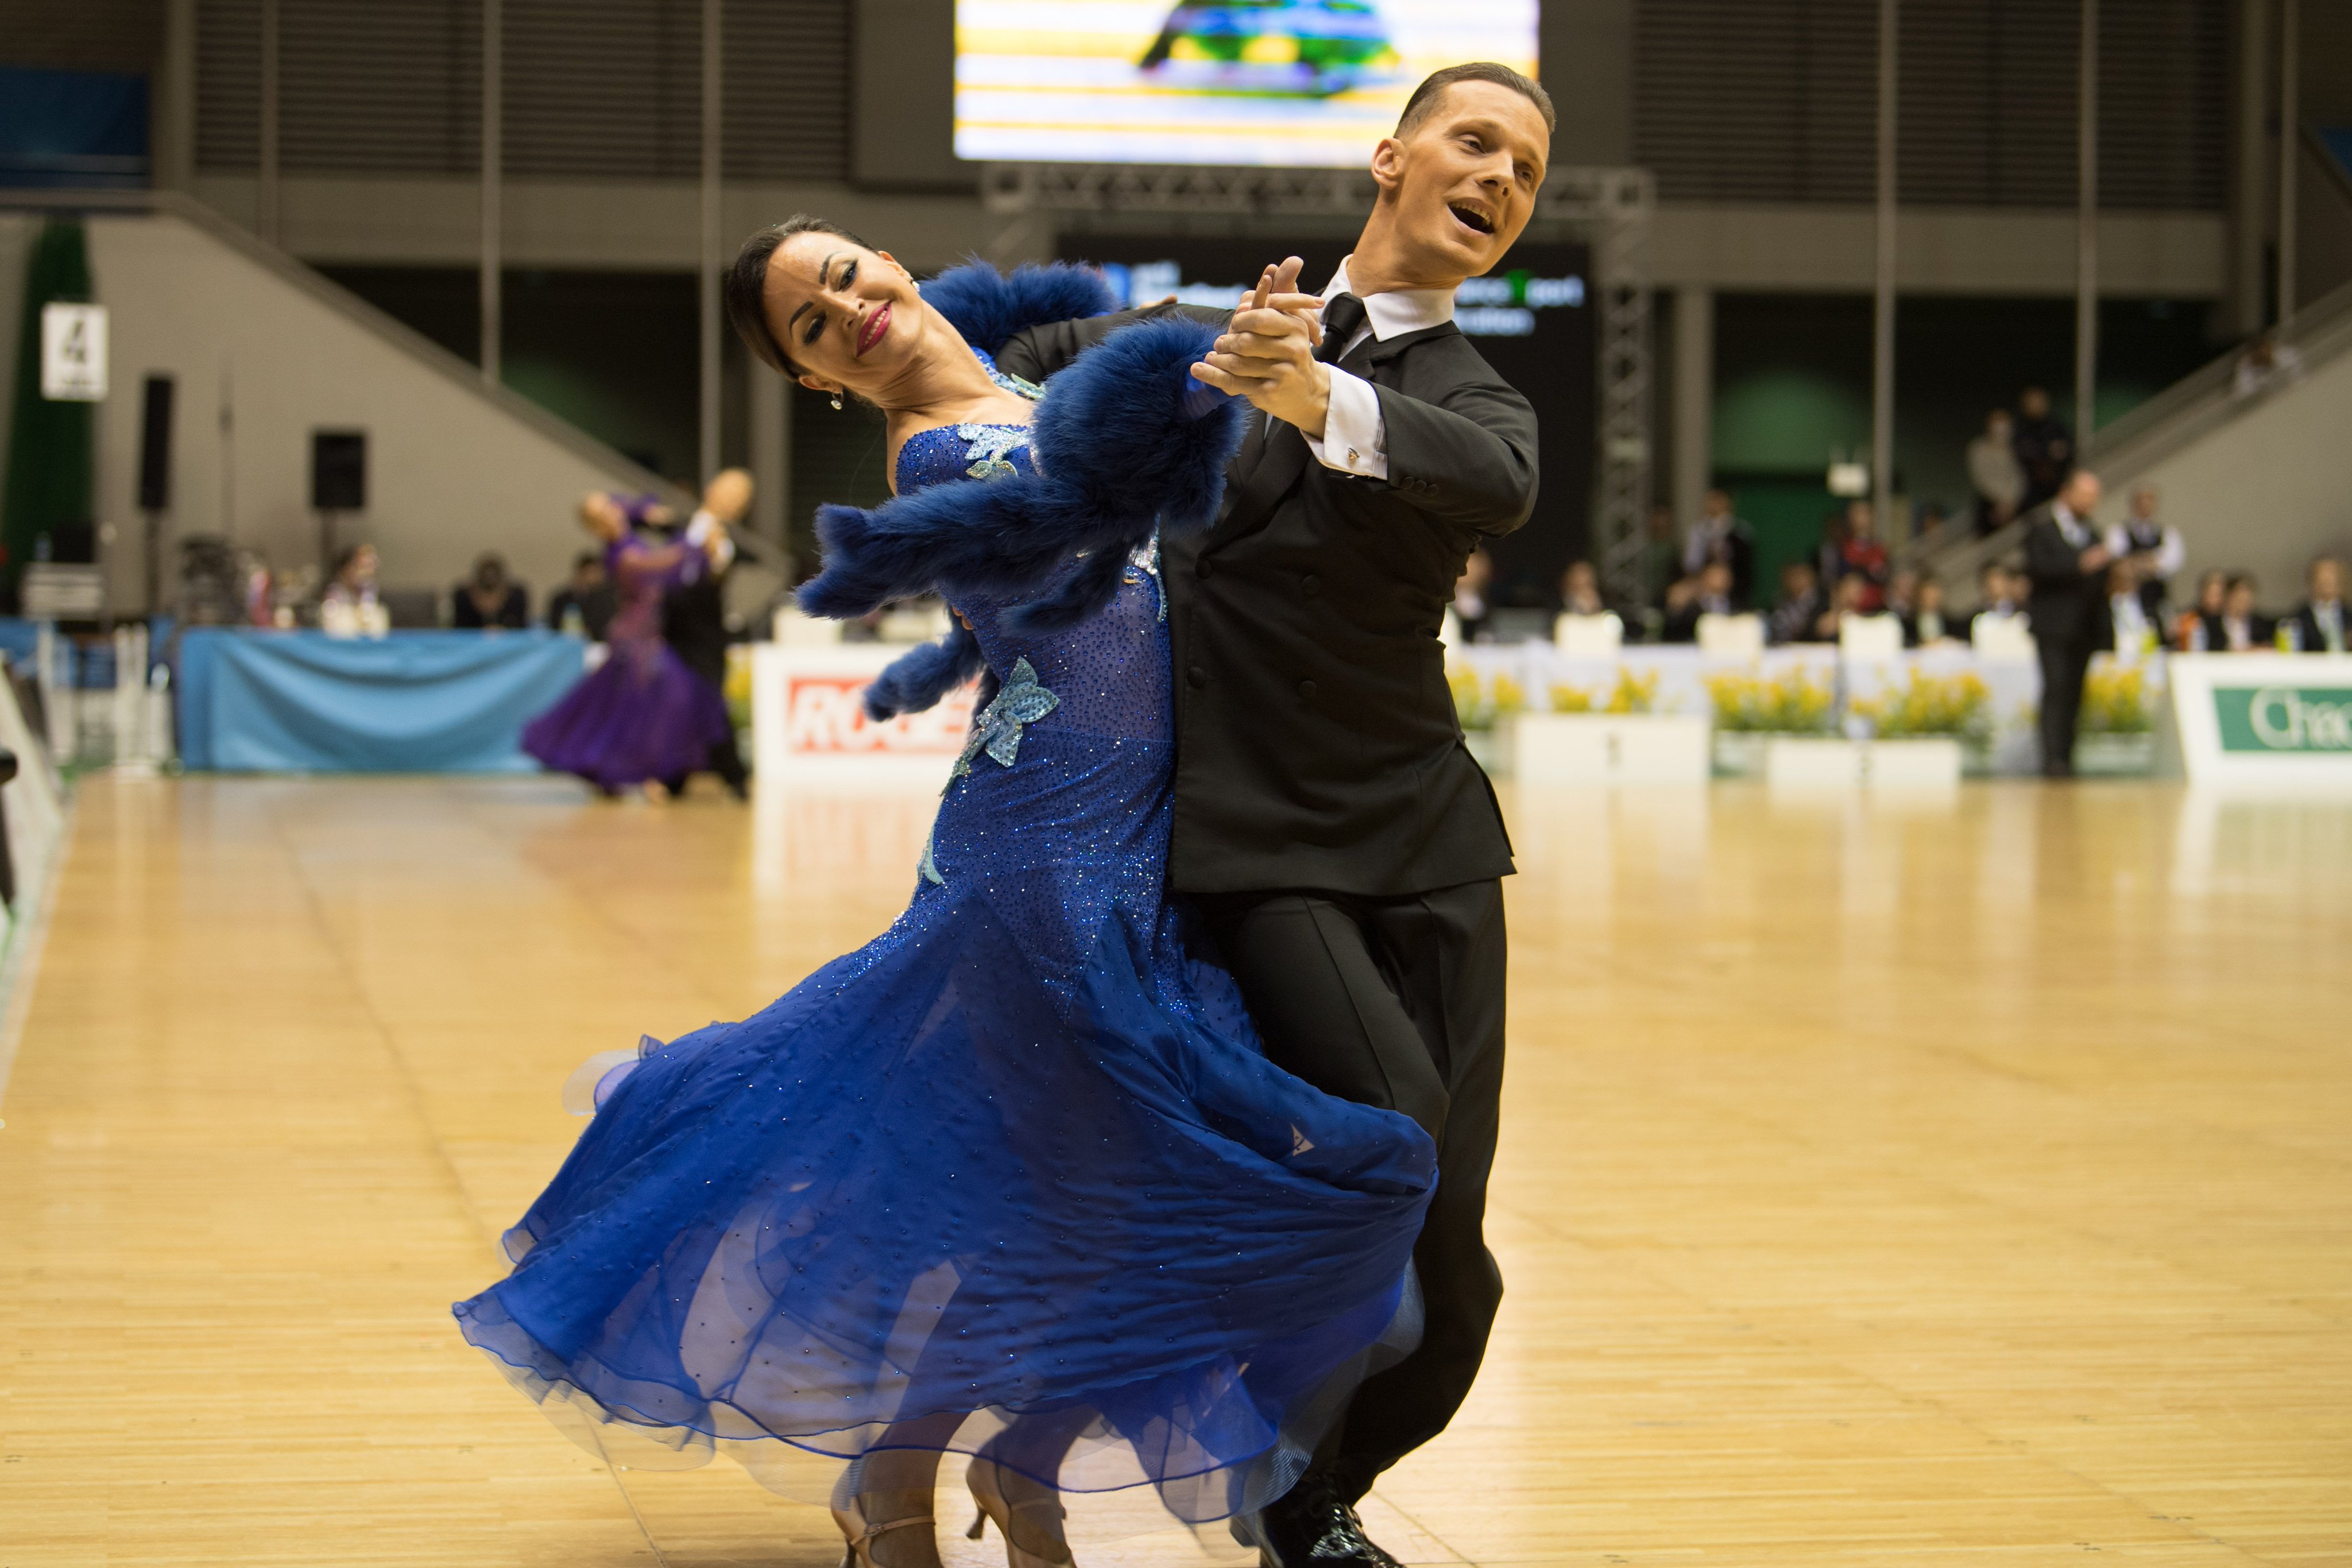 2022 - Nikolay DARIN et Natalia SEREDINA - MOLDAVIE